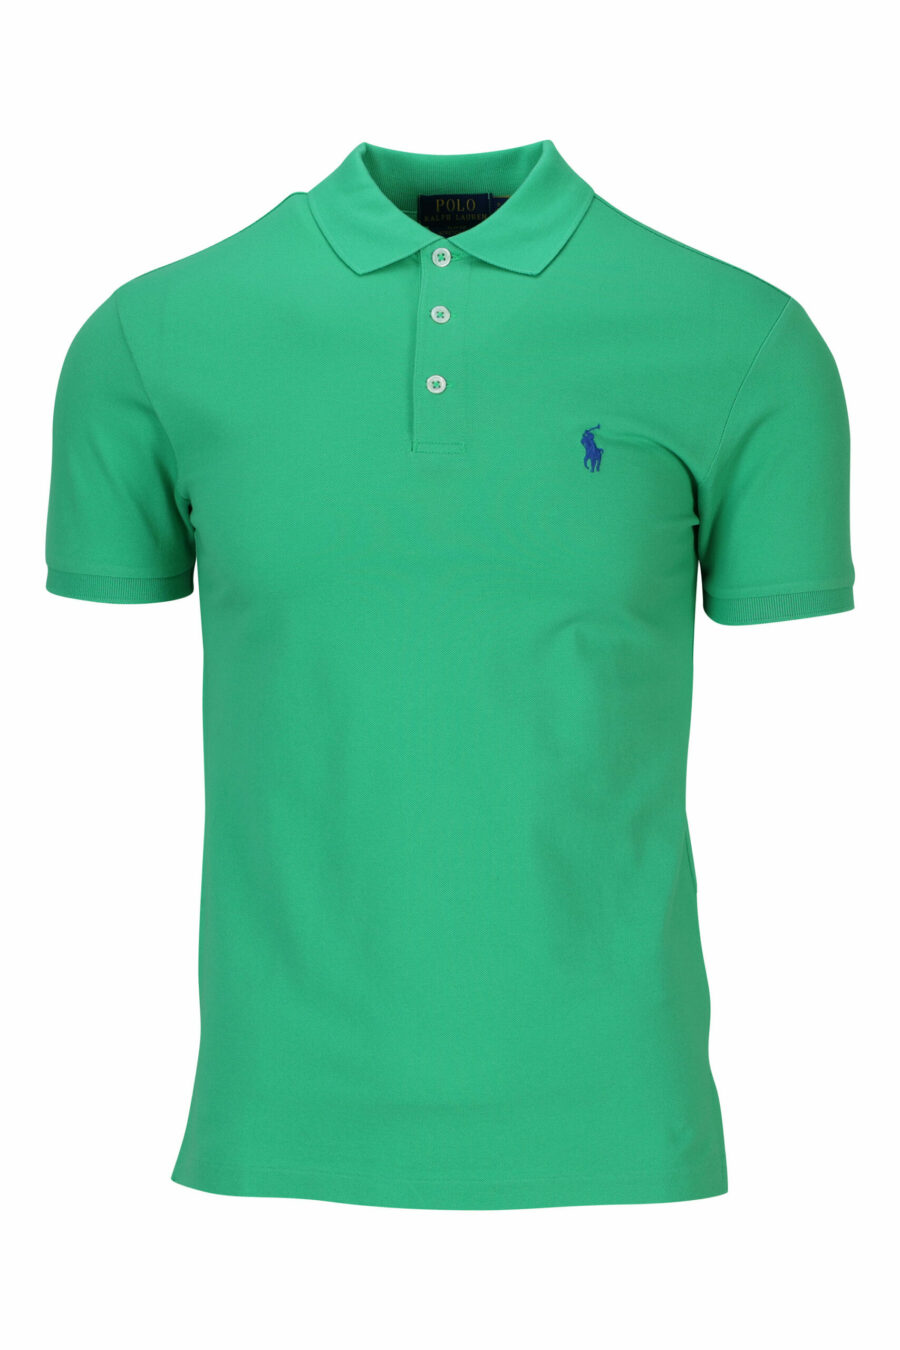 T-shirt vert et bleu avec mini-logo "polo" - 3616535909687